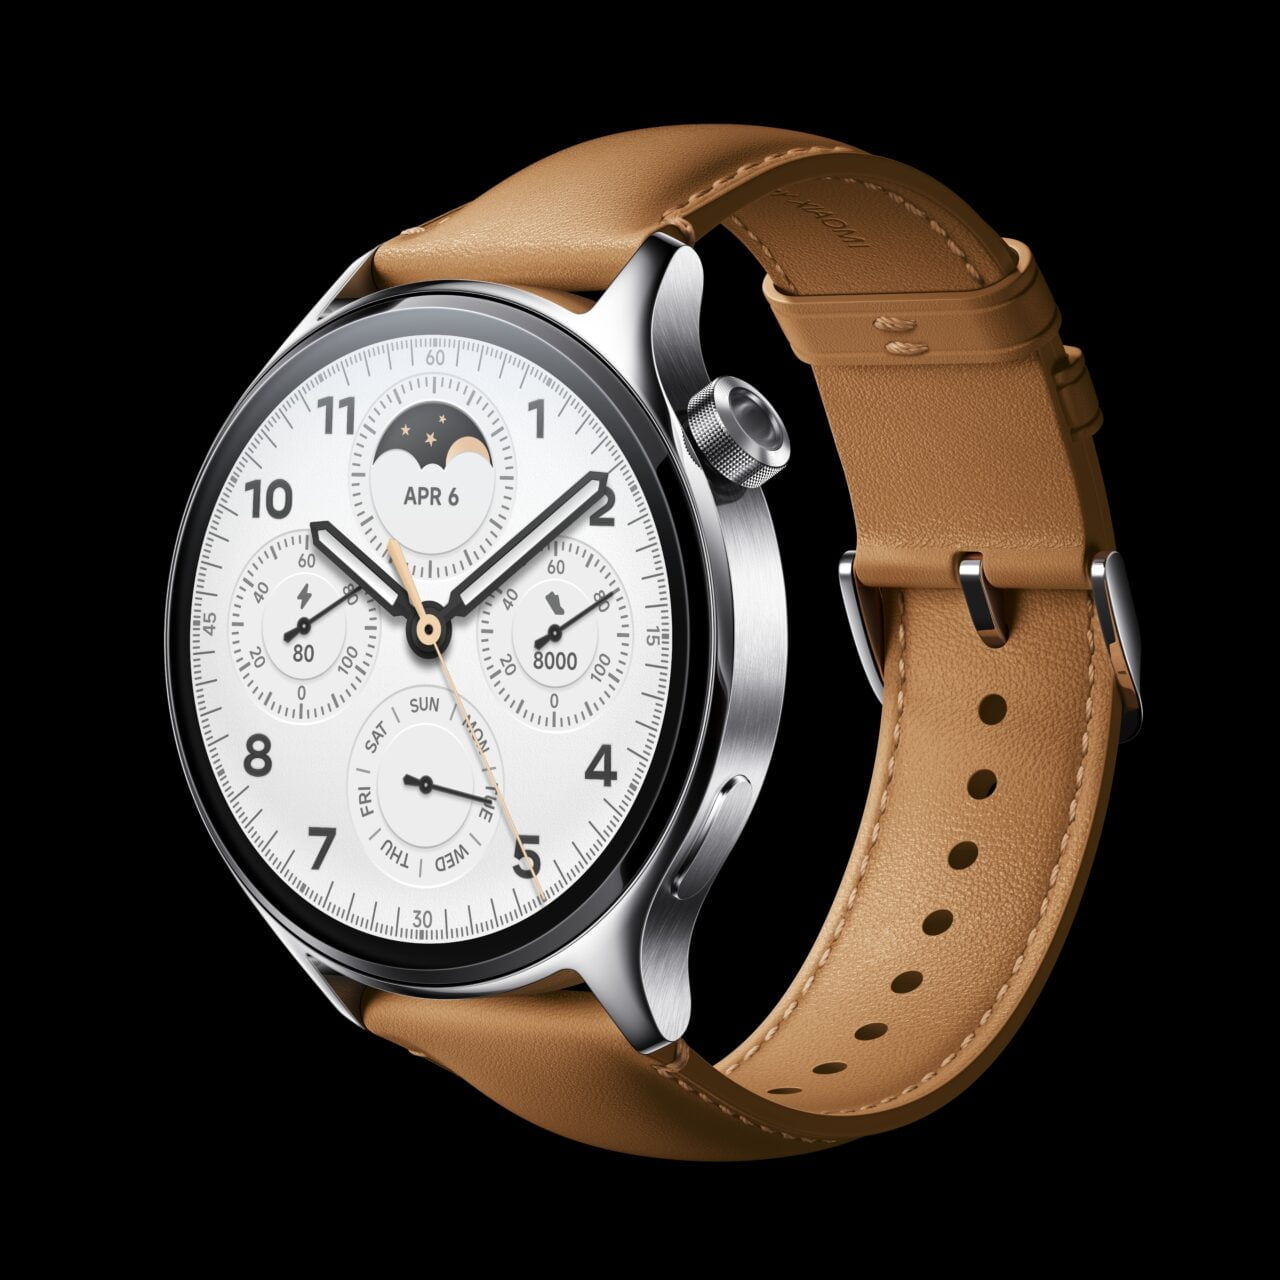 xiaomi watch s1 pro premiera android com pl scrm001